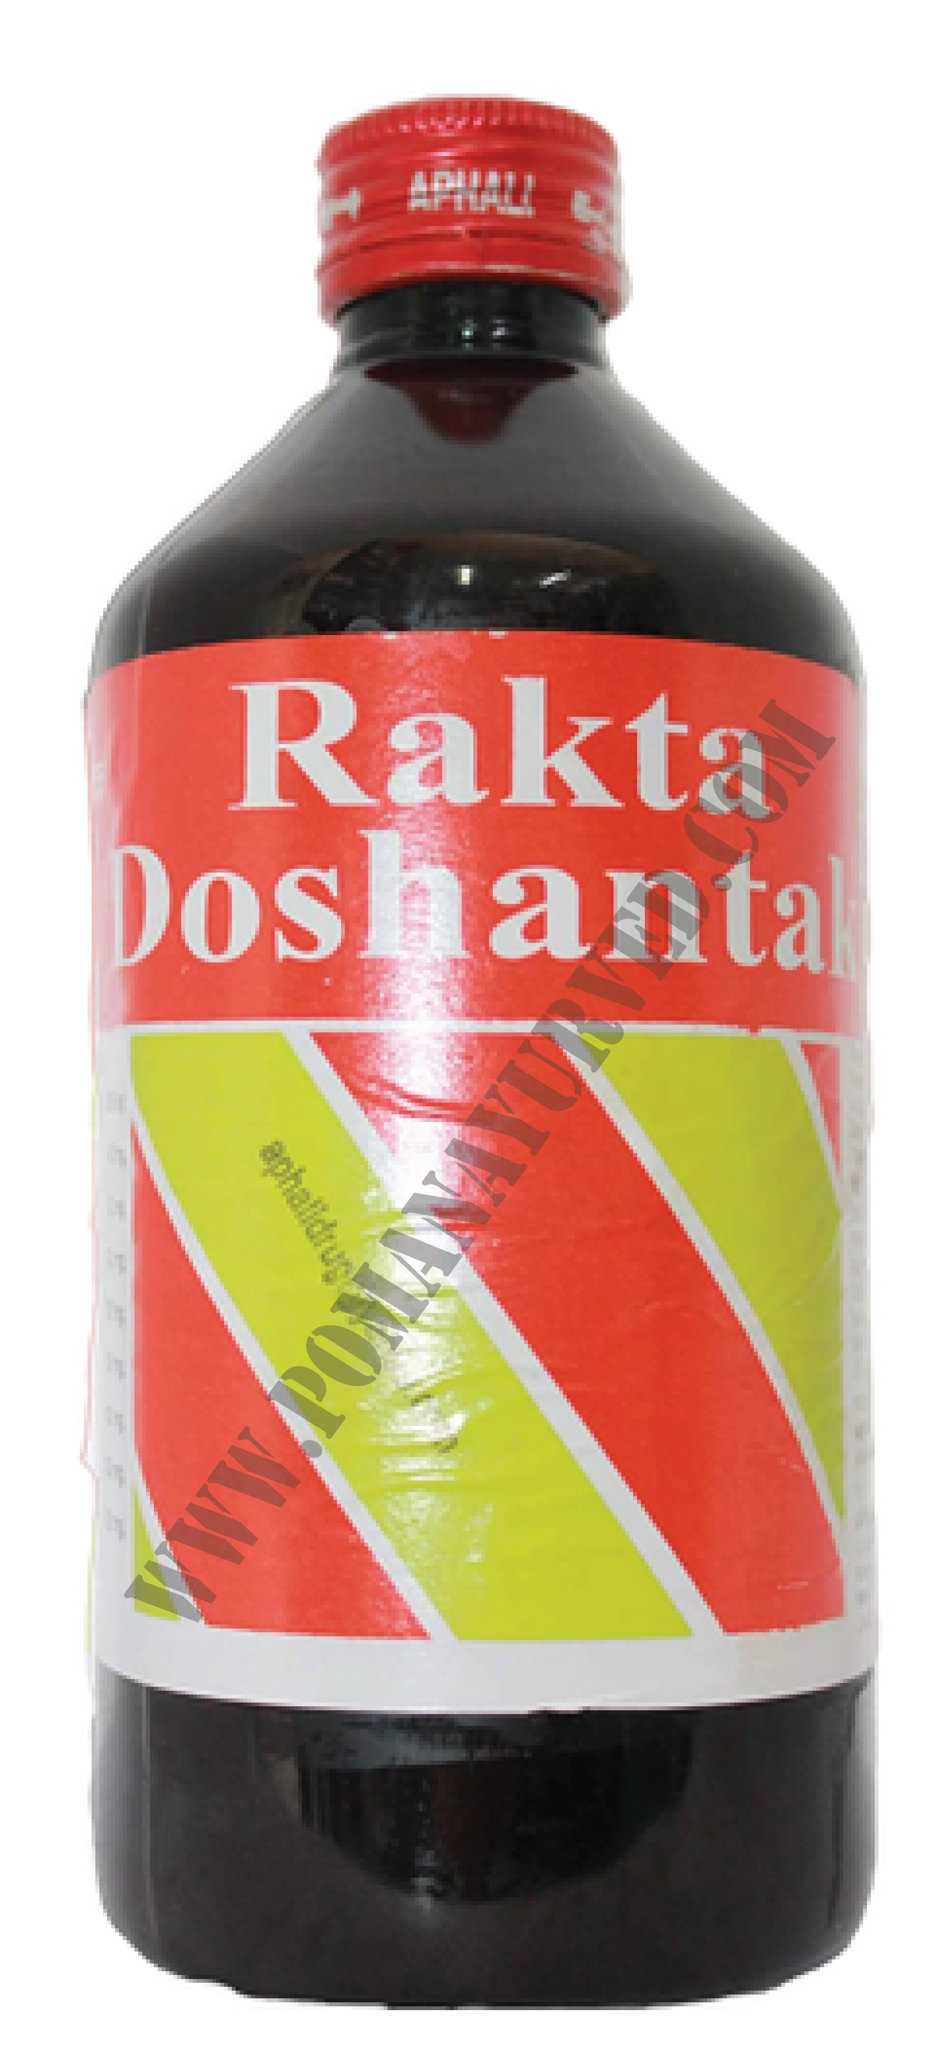 Picture of Rakta Doshantak